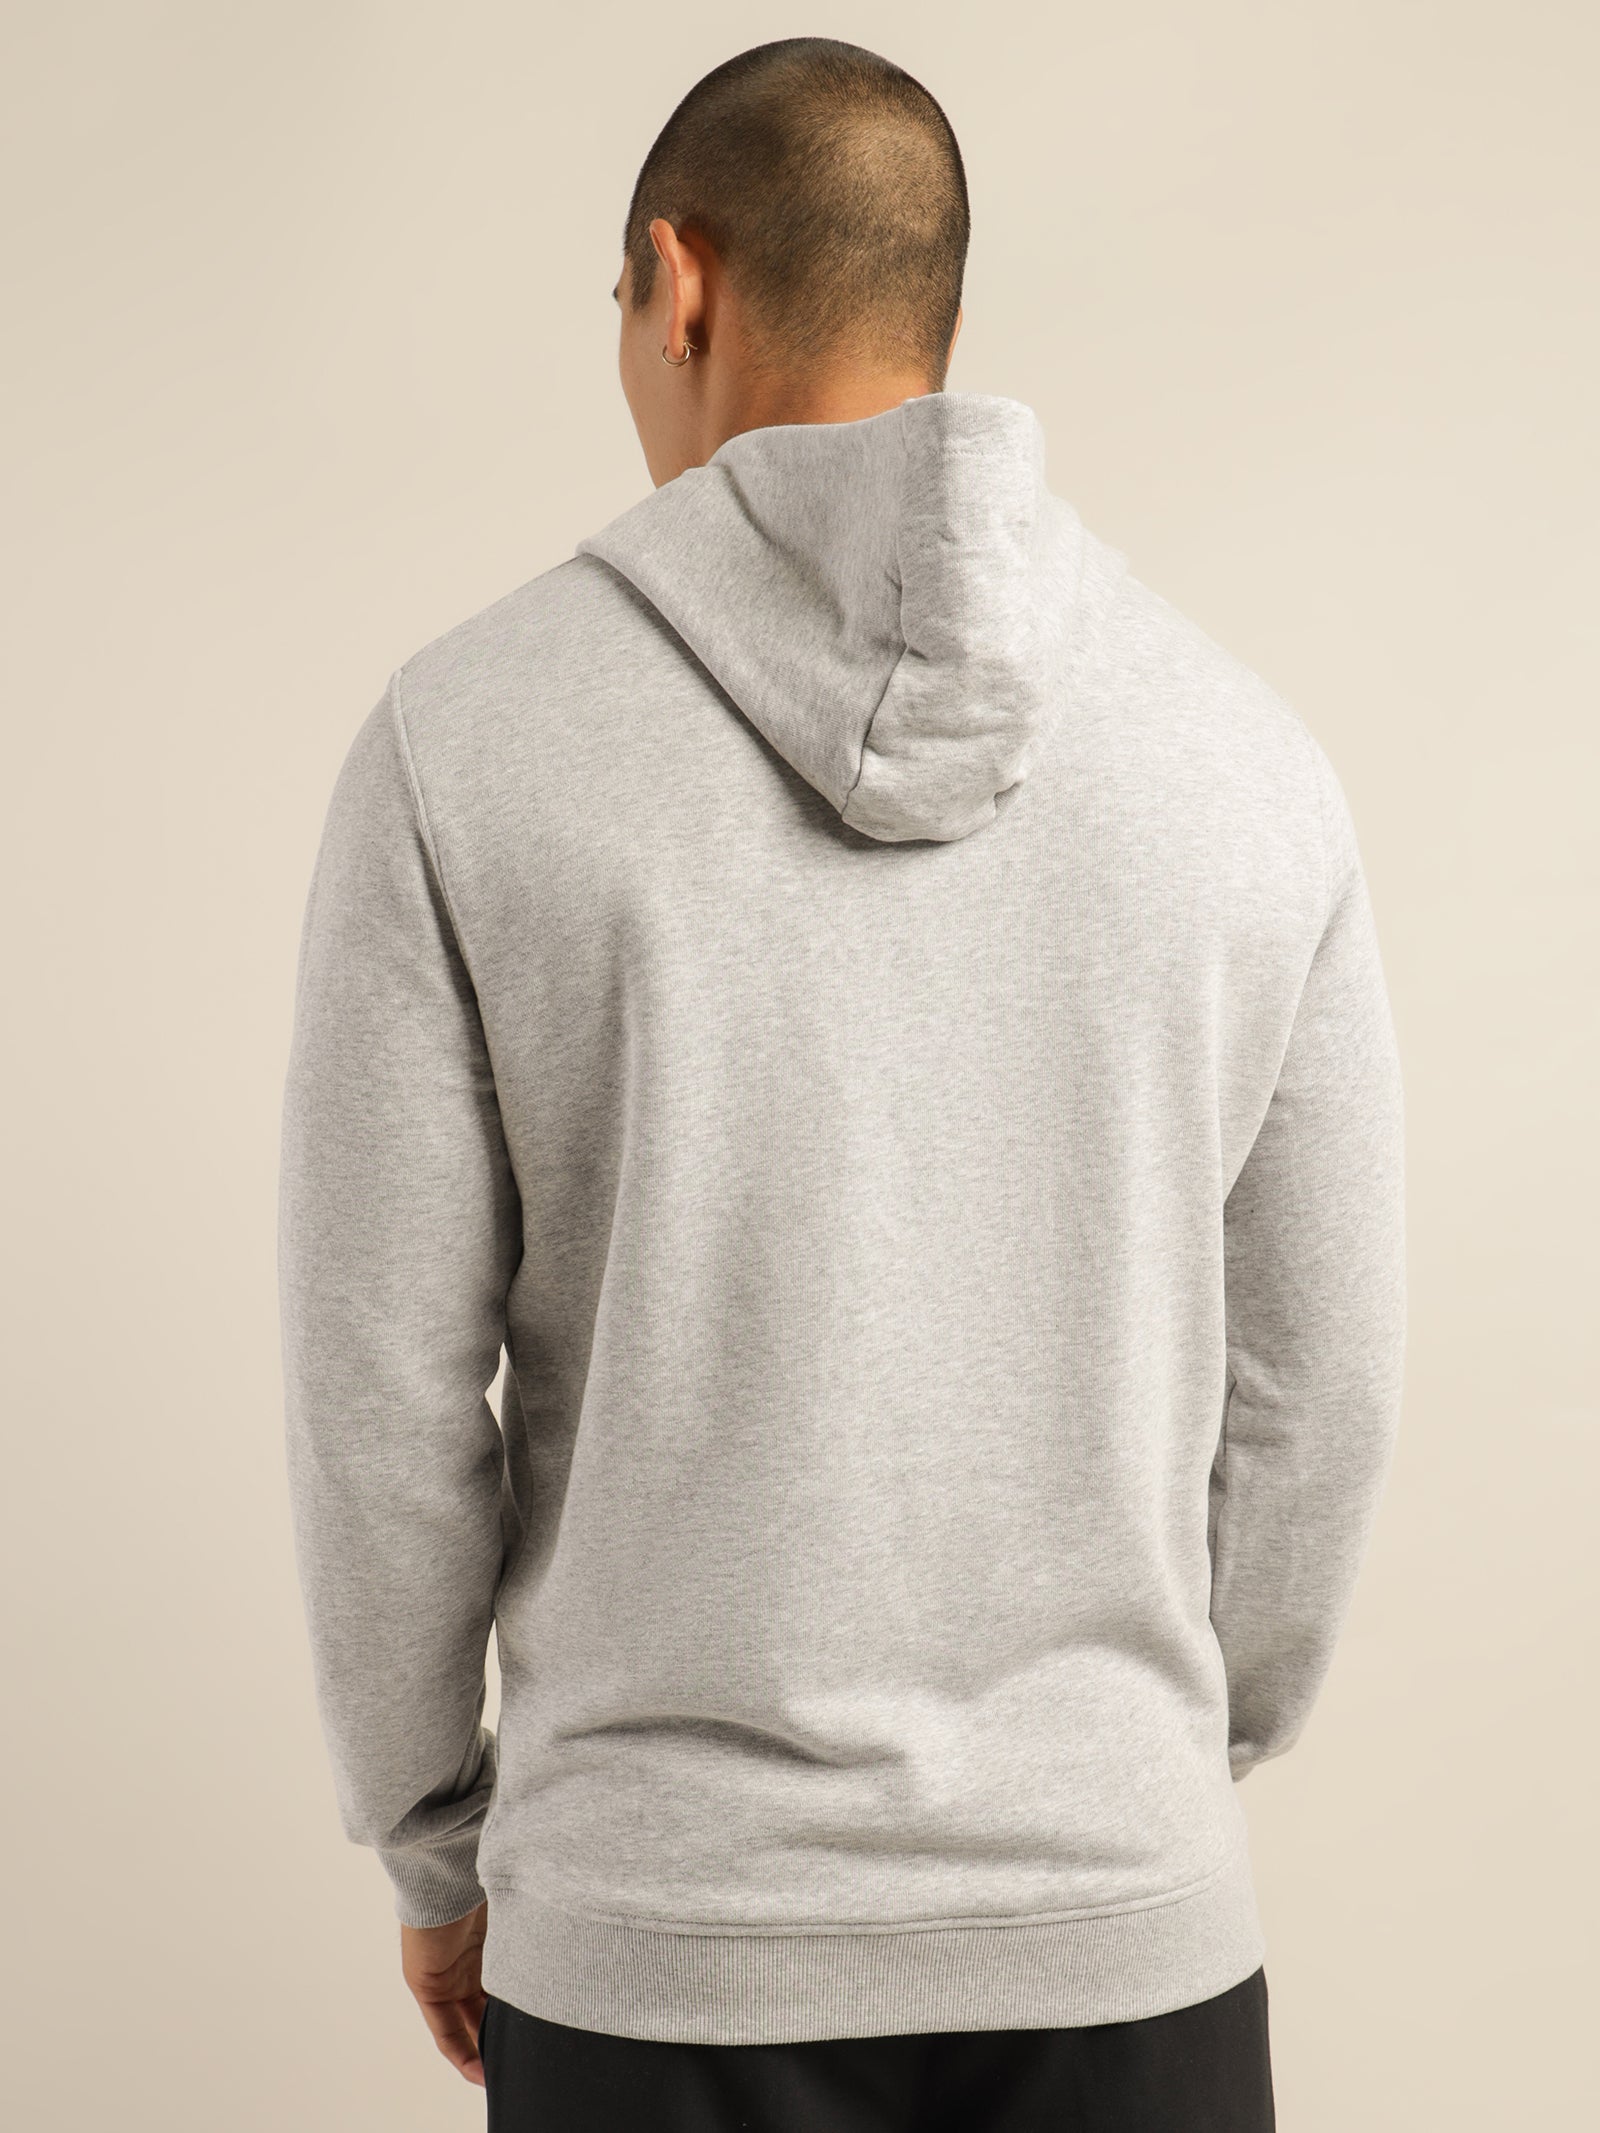 Long Sleeve Pullover Hood in Light Grey Marle